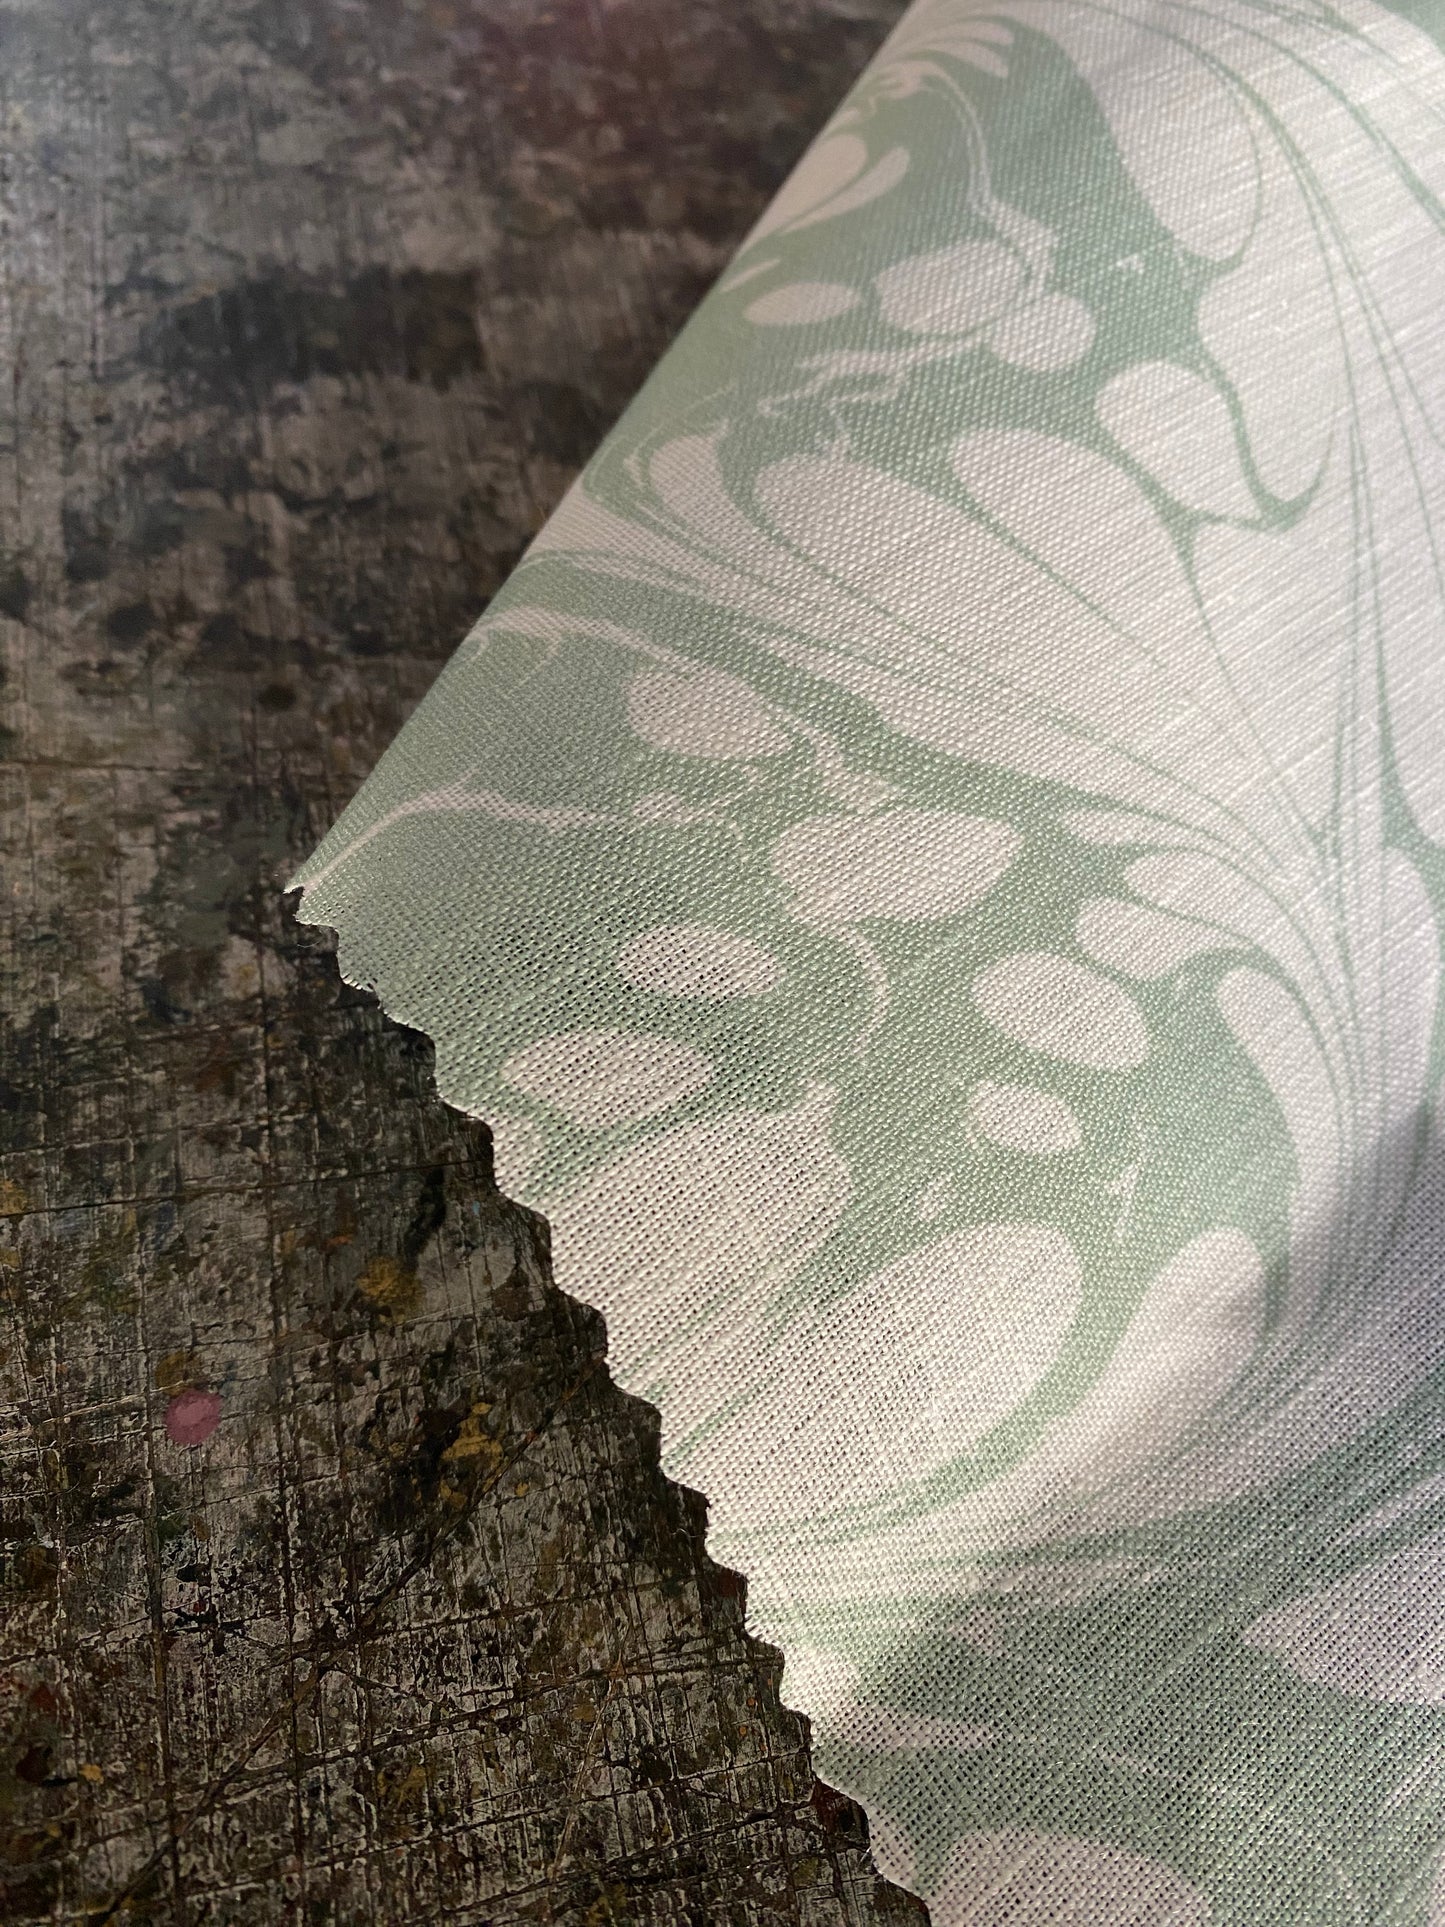 Printed Fabric - 'Flourish' Col: Willow - 100% Fine Linen